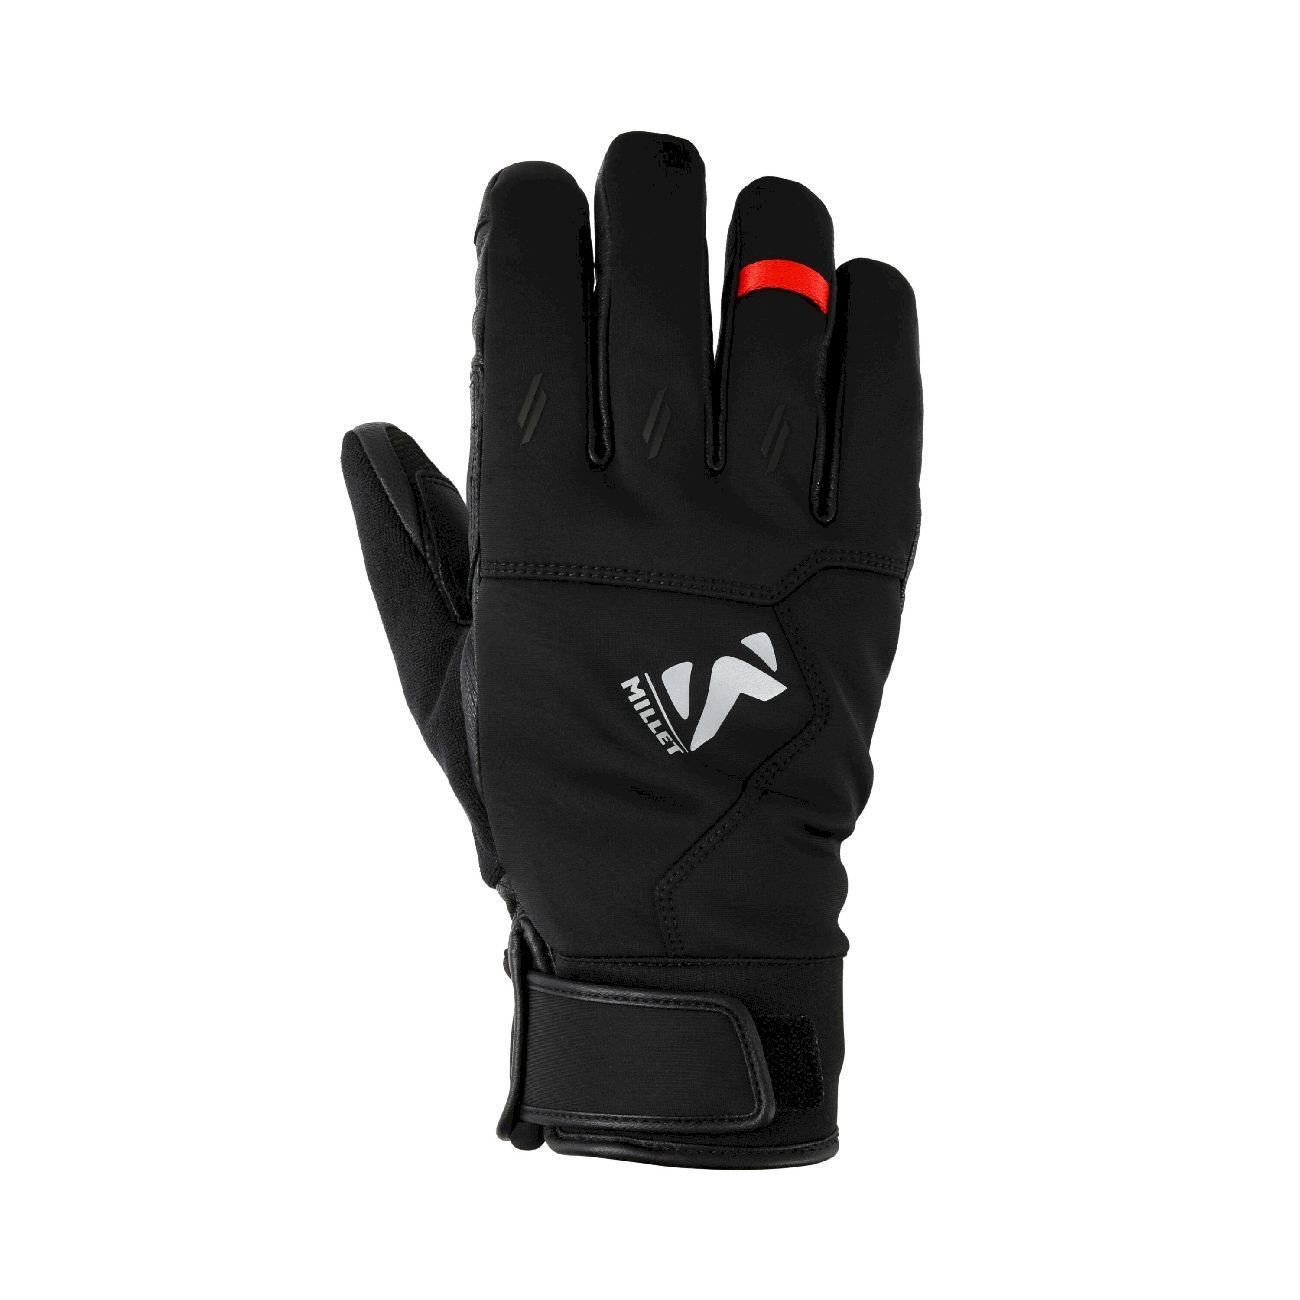 Millet Touring Glove II - Ski gloves - Men's